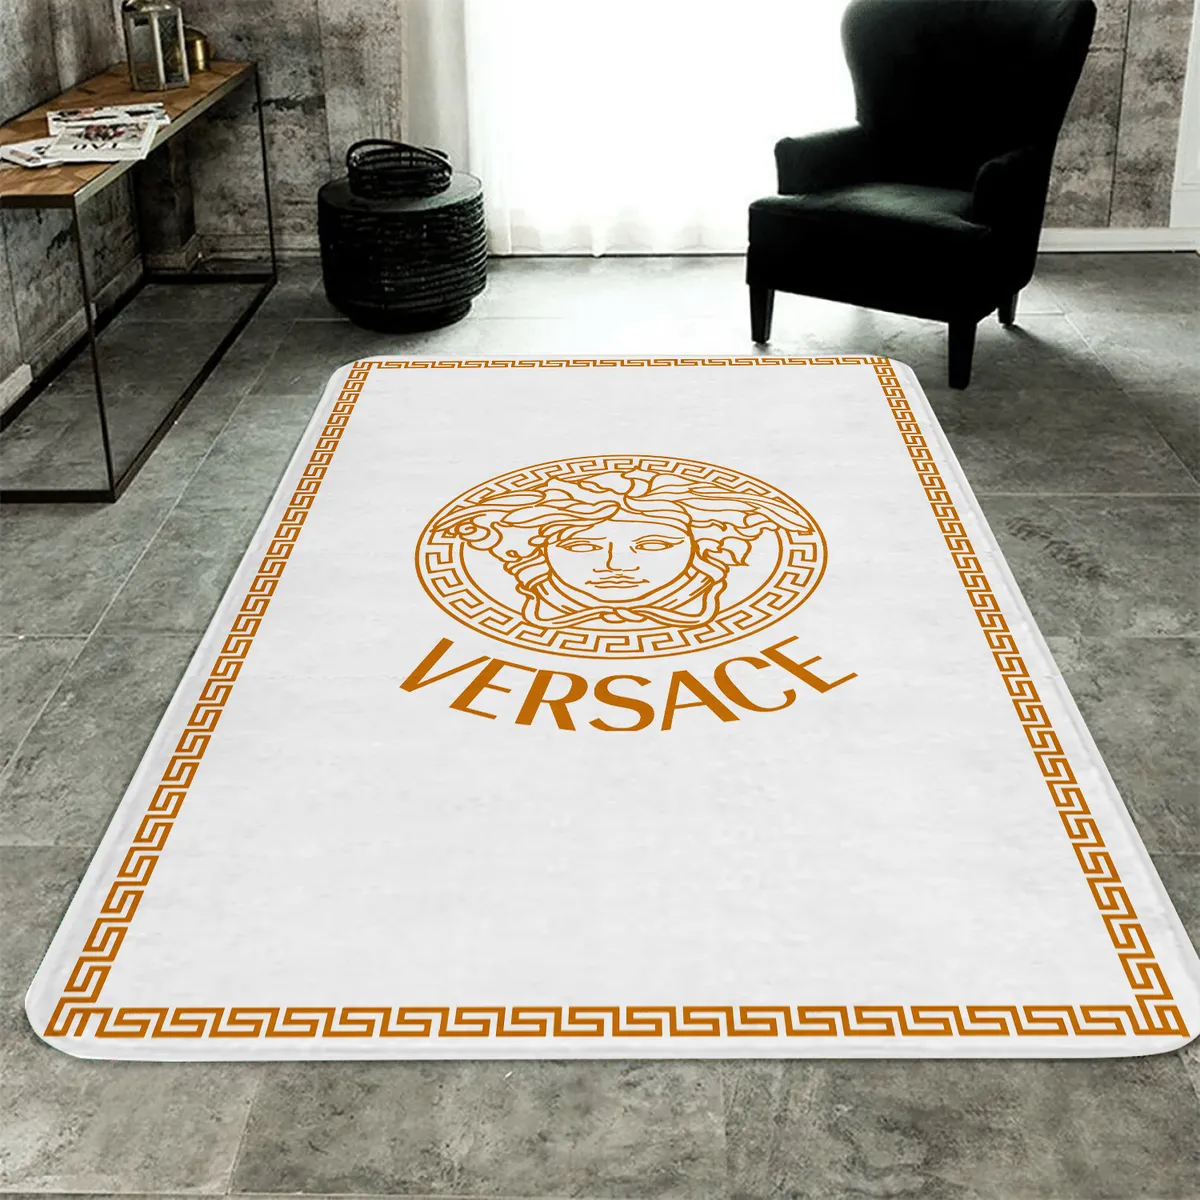 Versace White Golden Rectangle Rug Home Decor Fashion Brand Luxury Area Carpet Door Mat